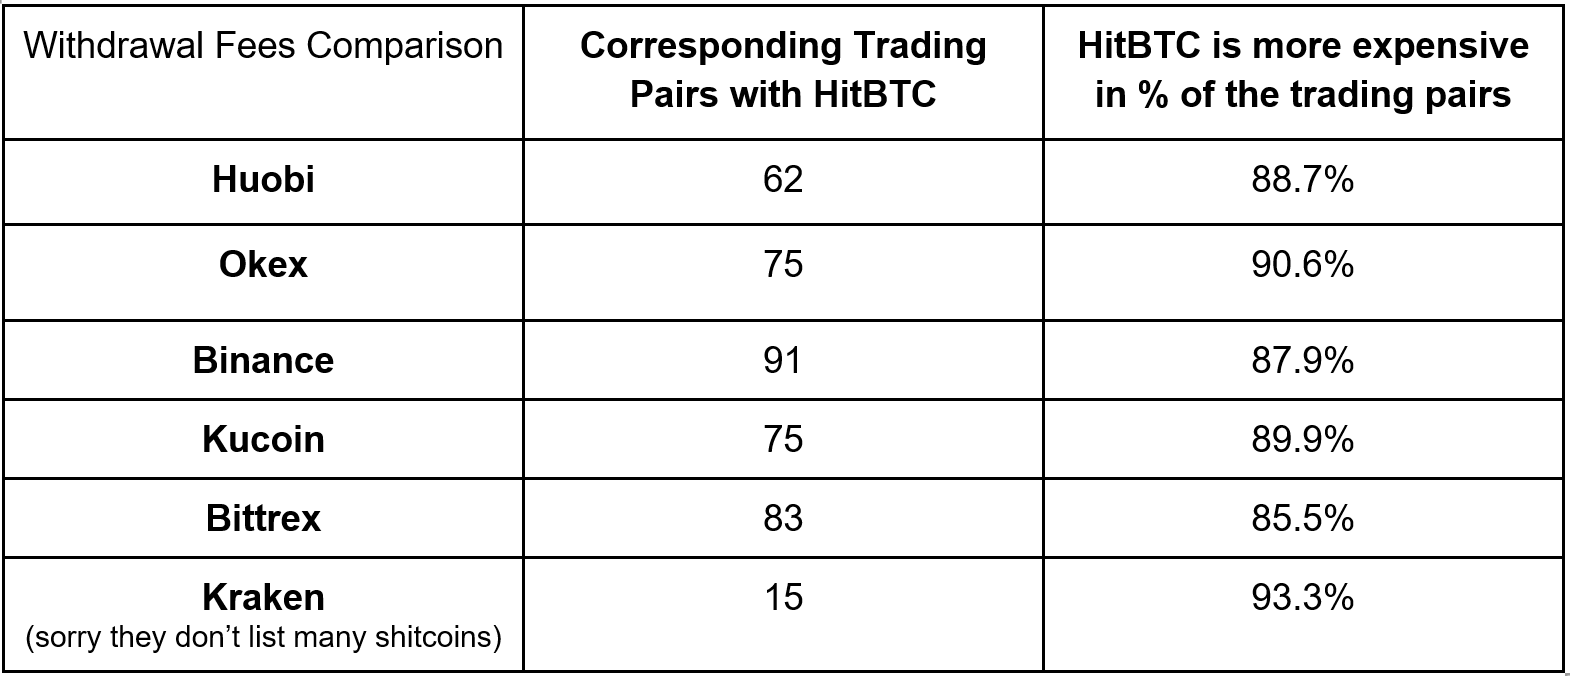 Comparing withdrawal fees of HitBTC vs Huobi, Okex, Binance, Kucoin, Bittrex, and Kraken